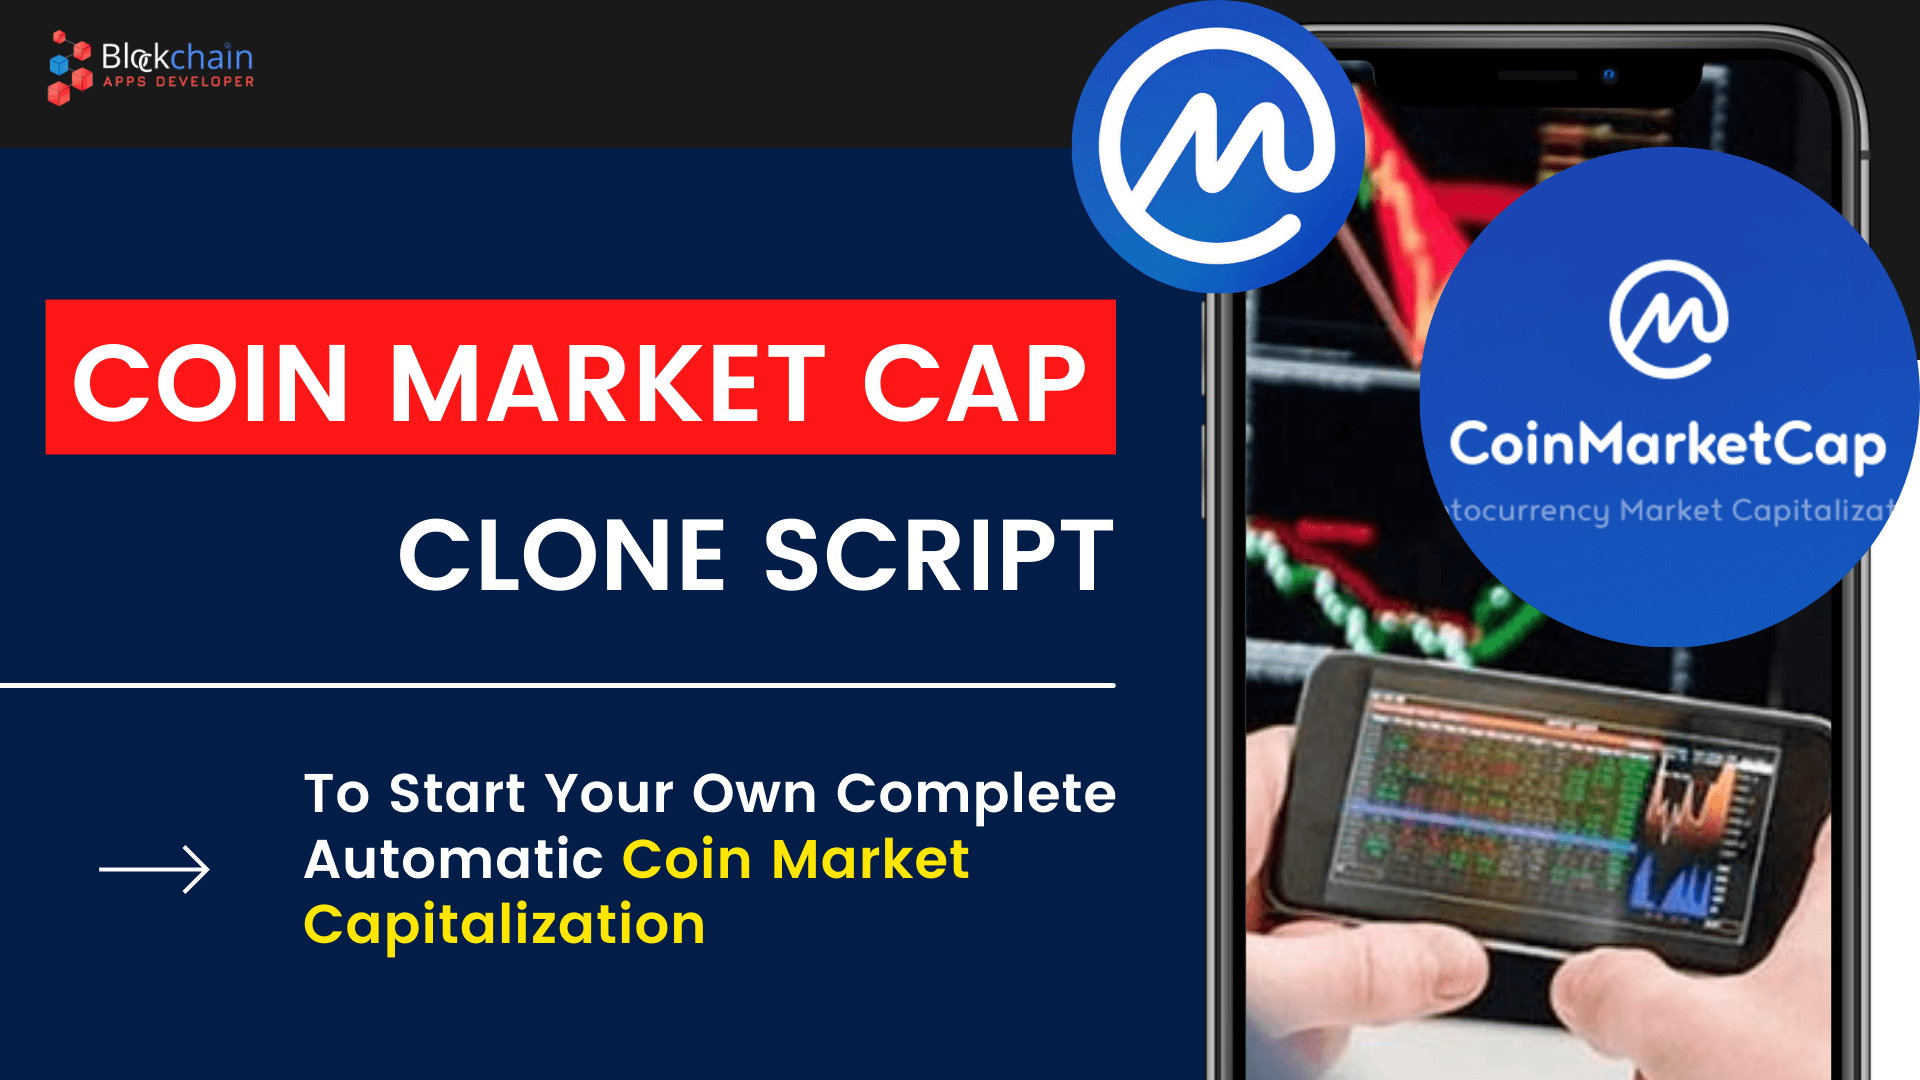 CoinMarketCap Clone Script - Build a Fully Automatic Coin Market Capitalization Like Coinmarketcap